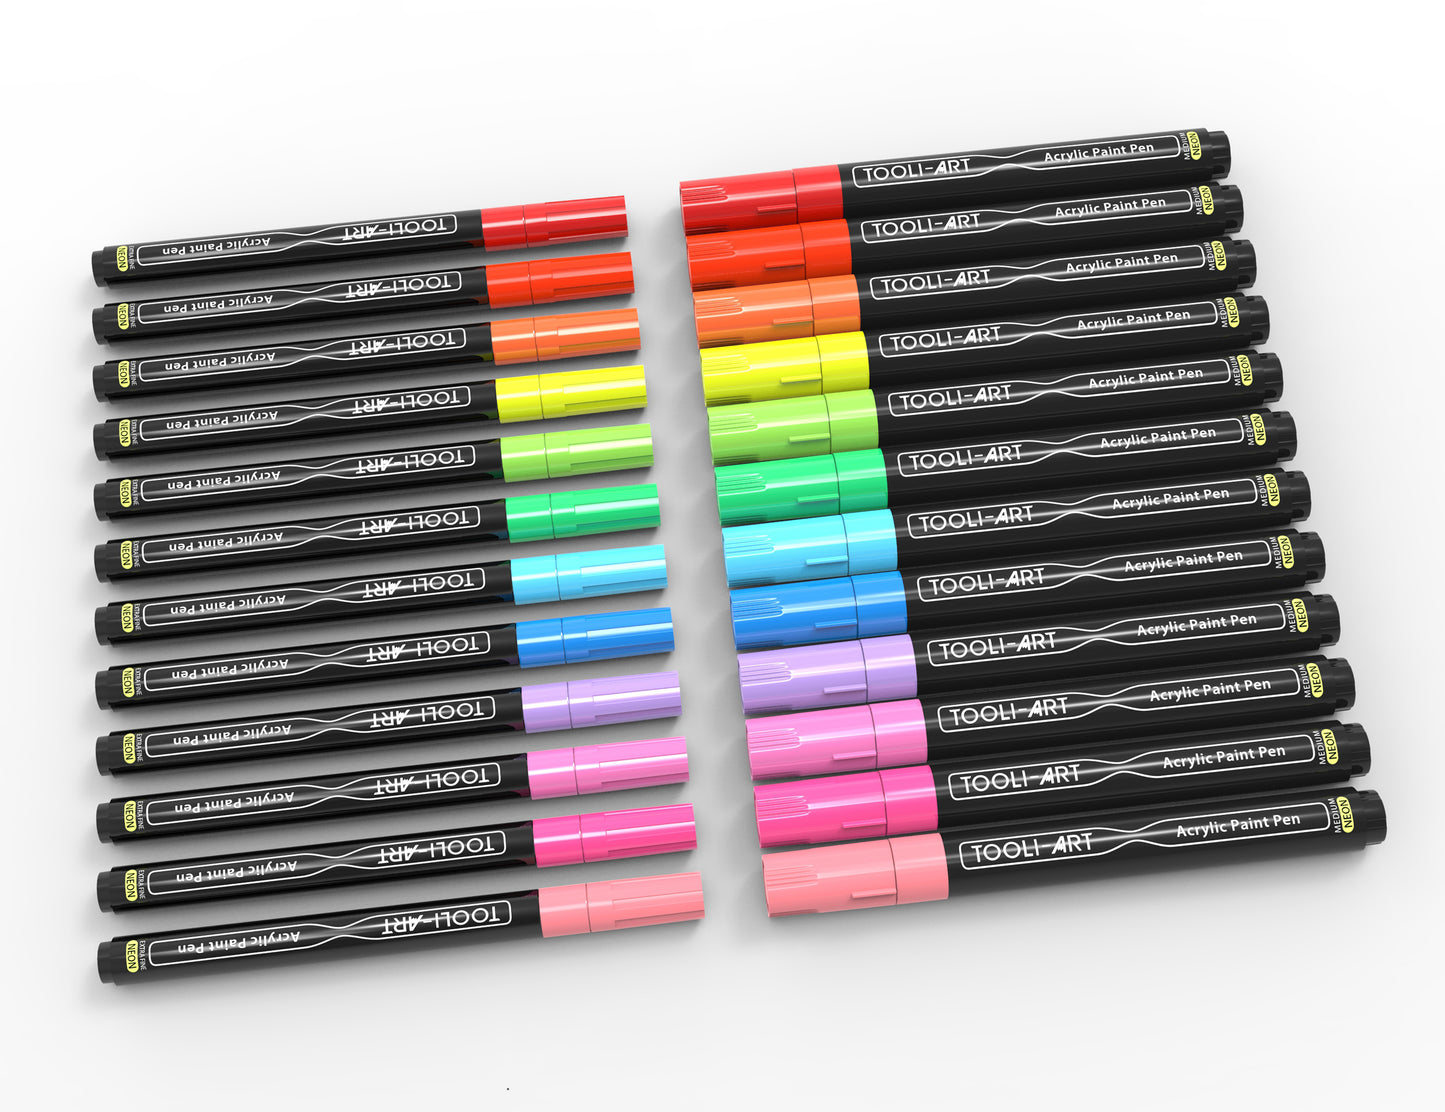 Neon splatter paint pens